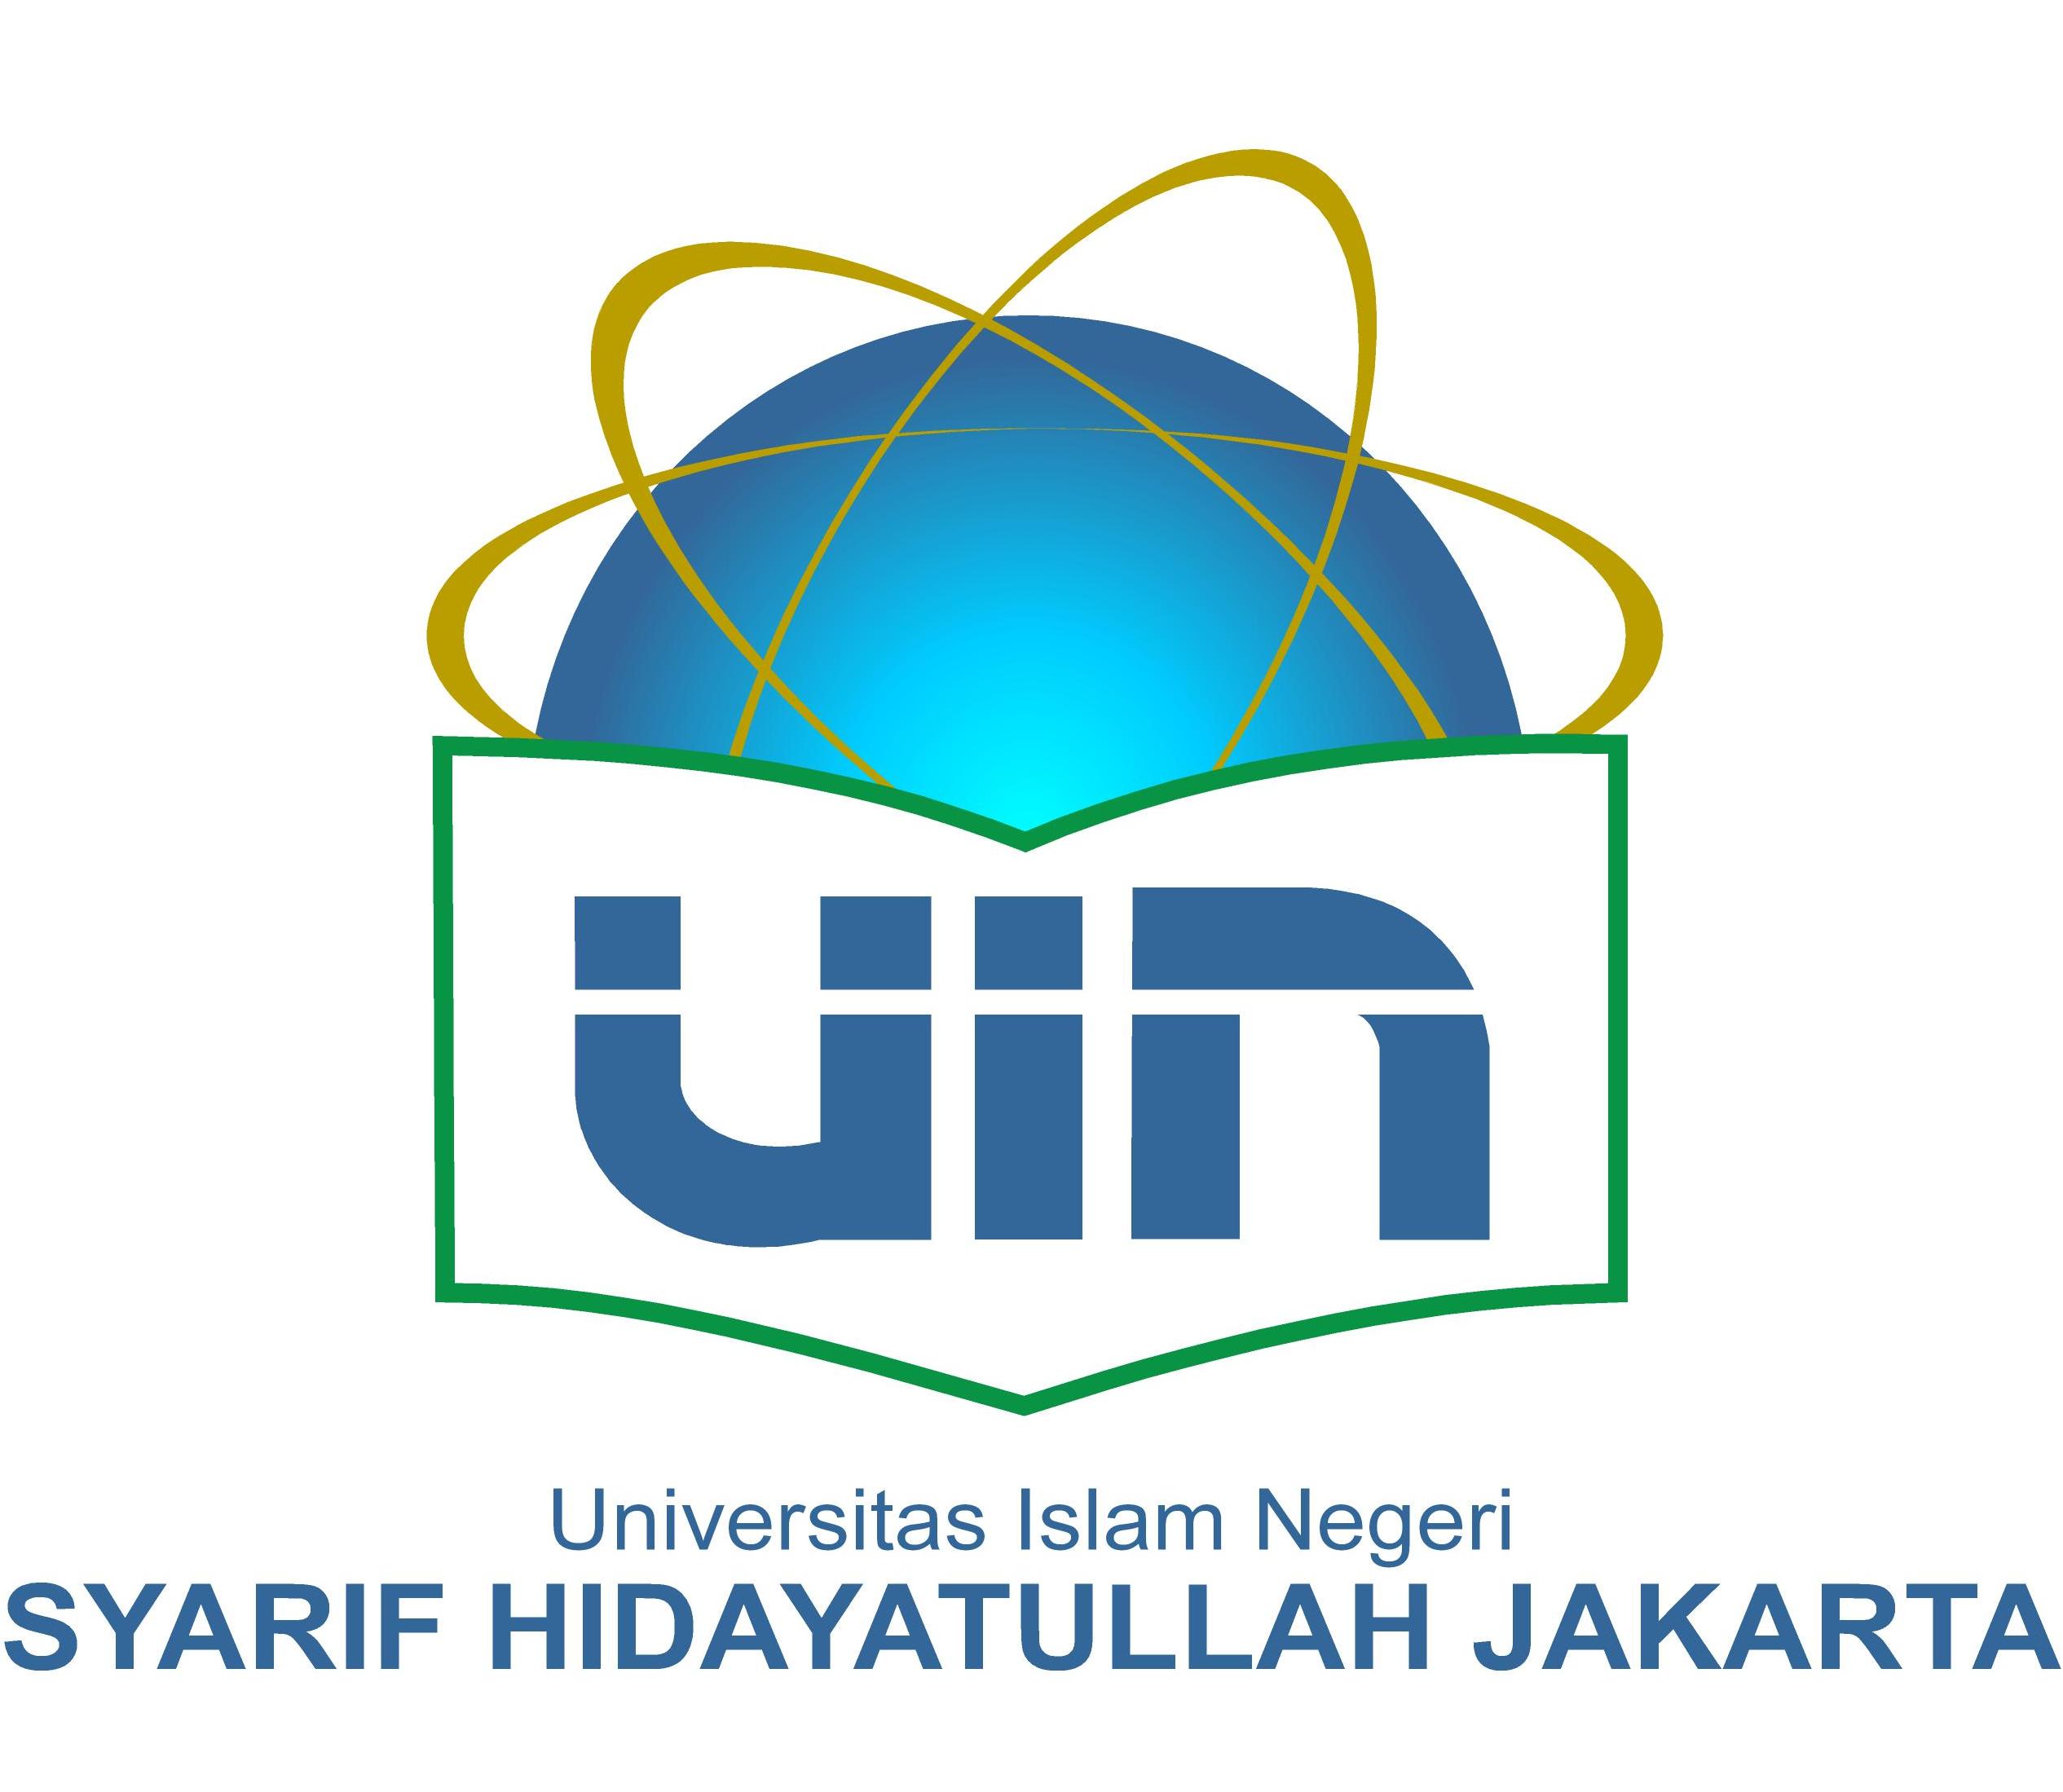 Universitas Islam Negeri Logo photo - 1